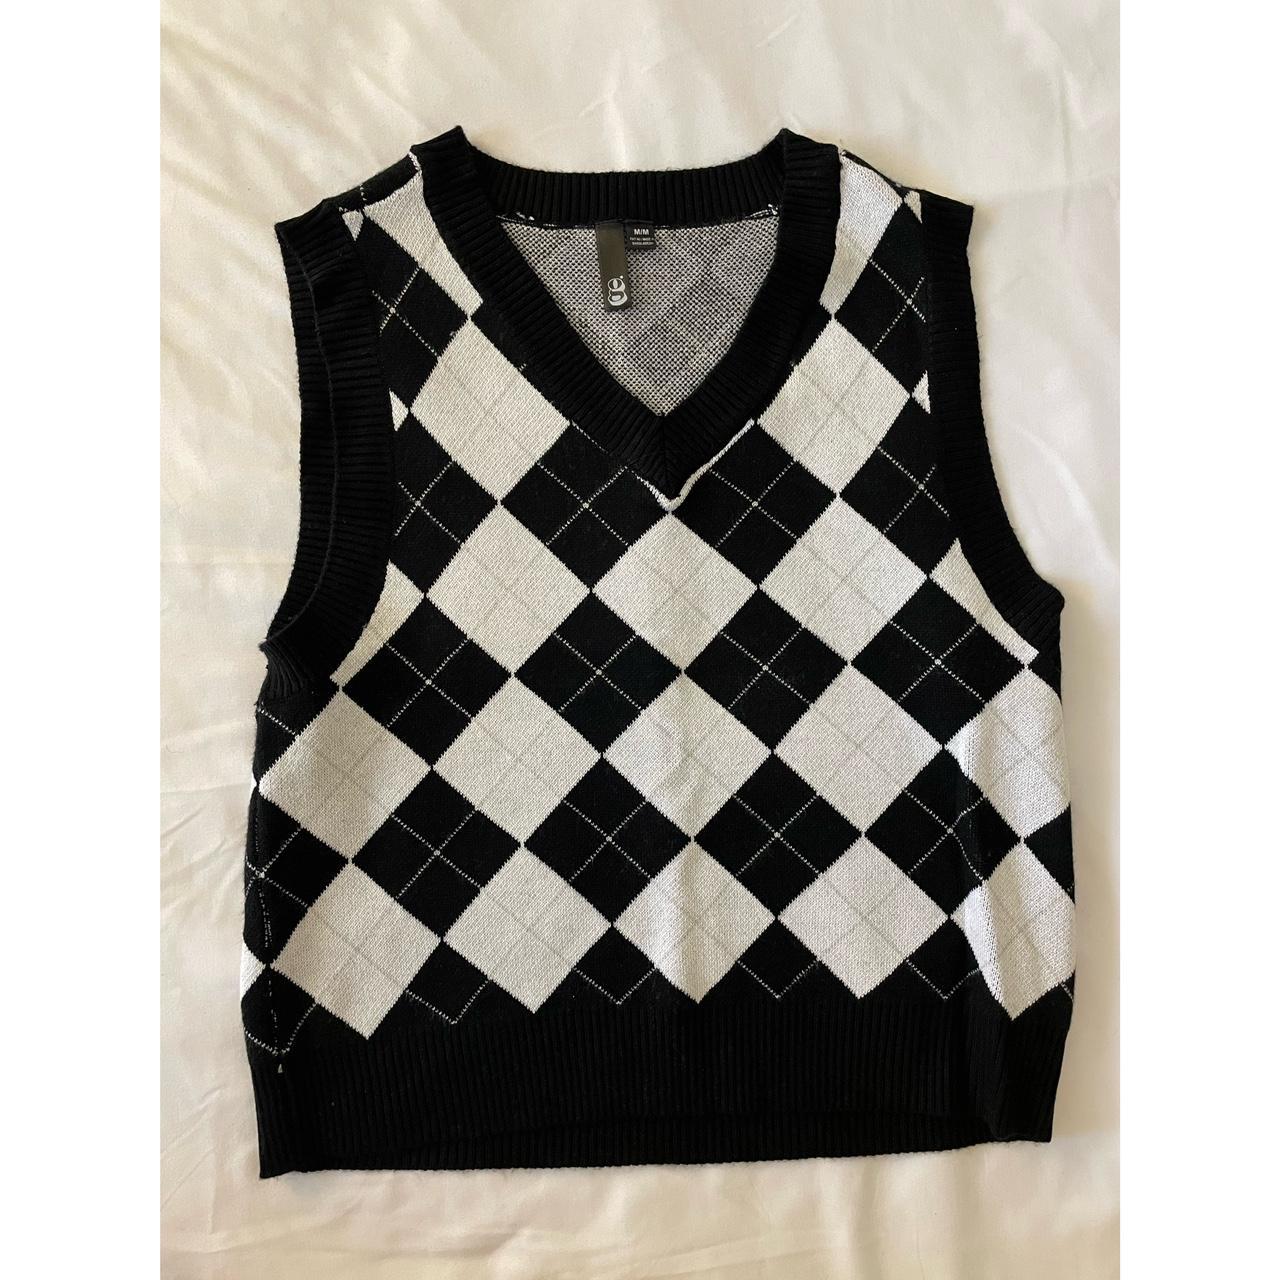 Garage black and white sweater vest Size M Slightly... - Depop